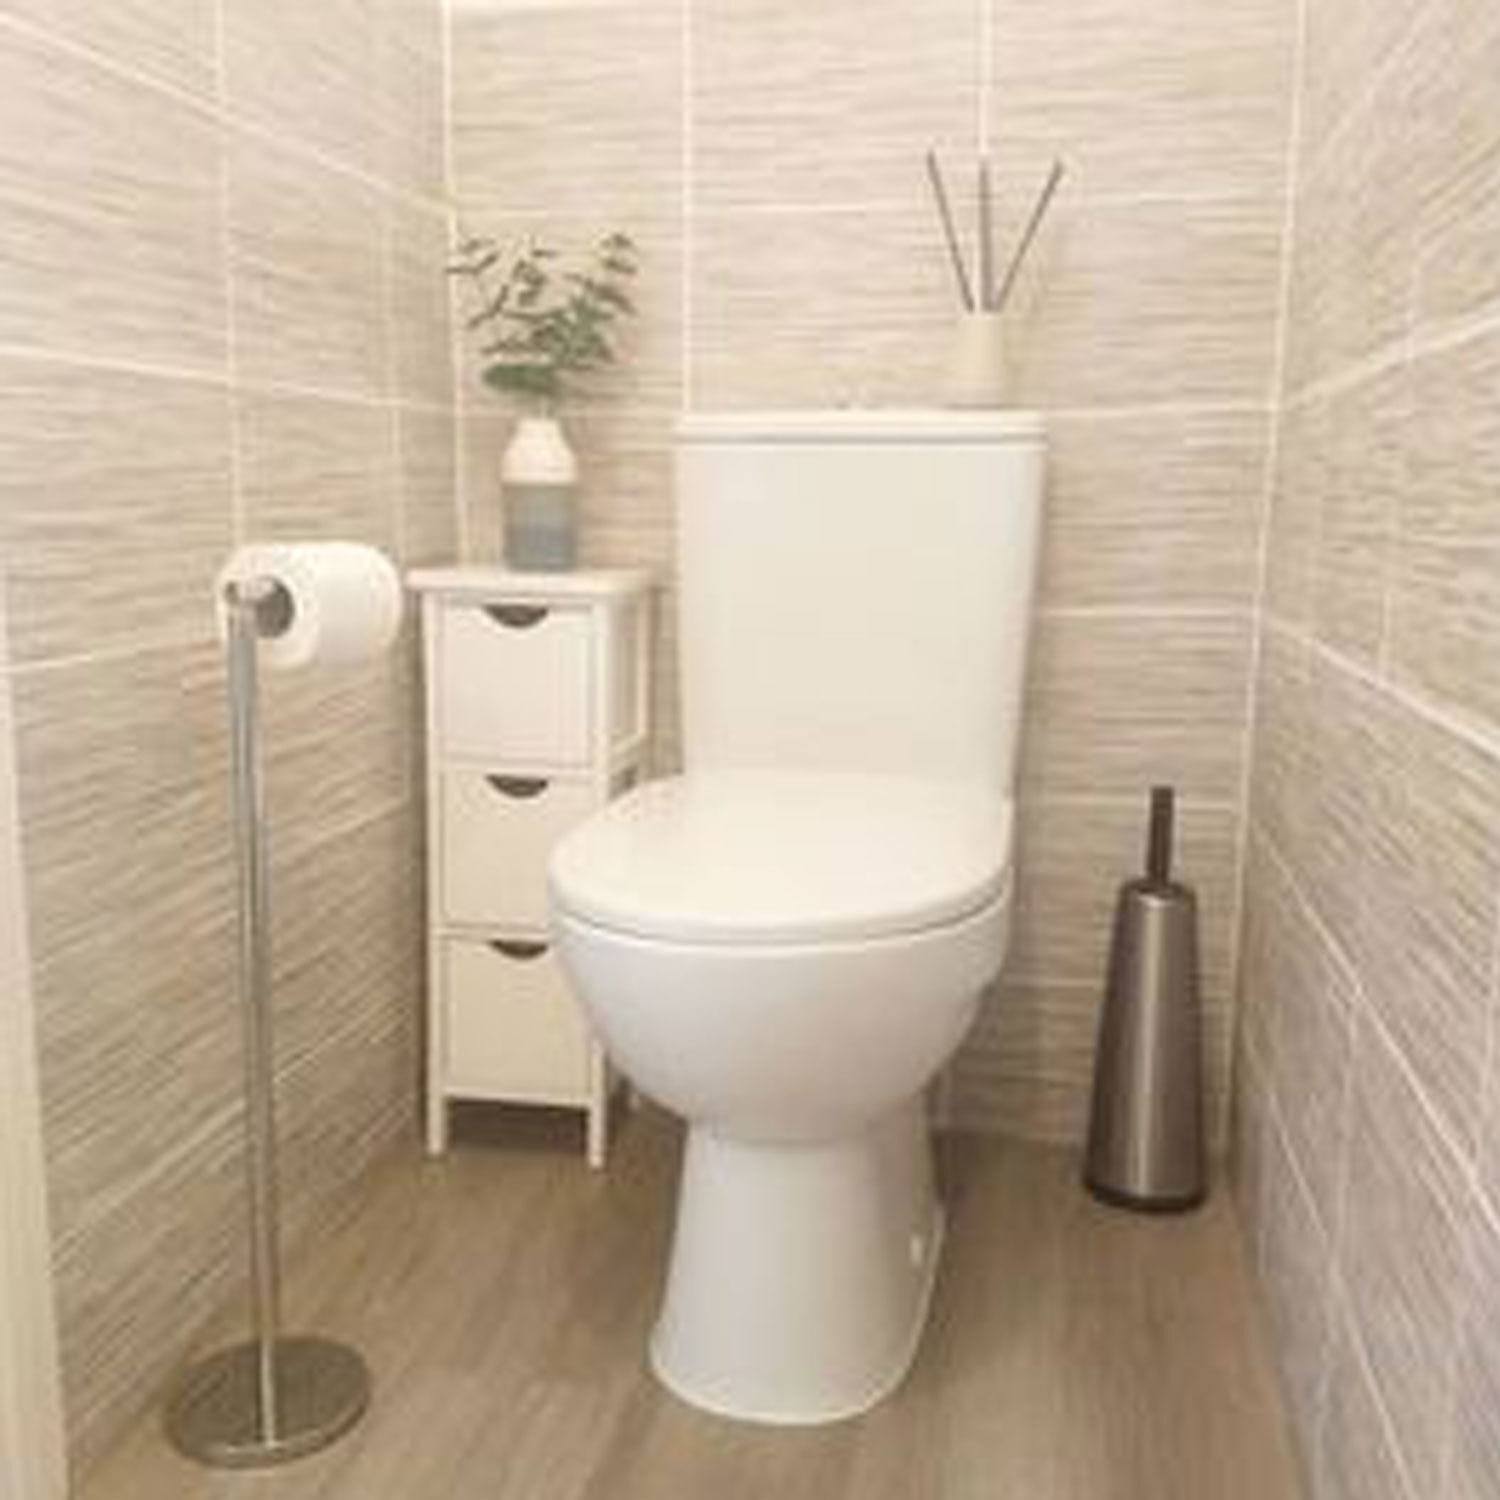 Brabantia Toilet Brush & Holder Set Bath Bathroom Loo Cleaning Brilliant Steel 